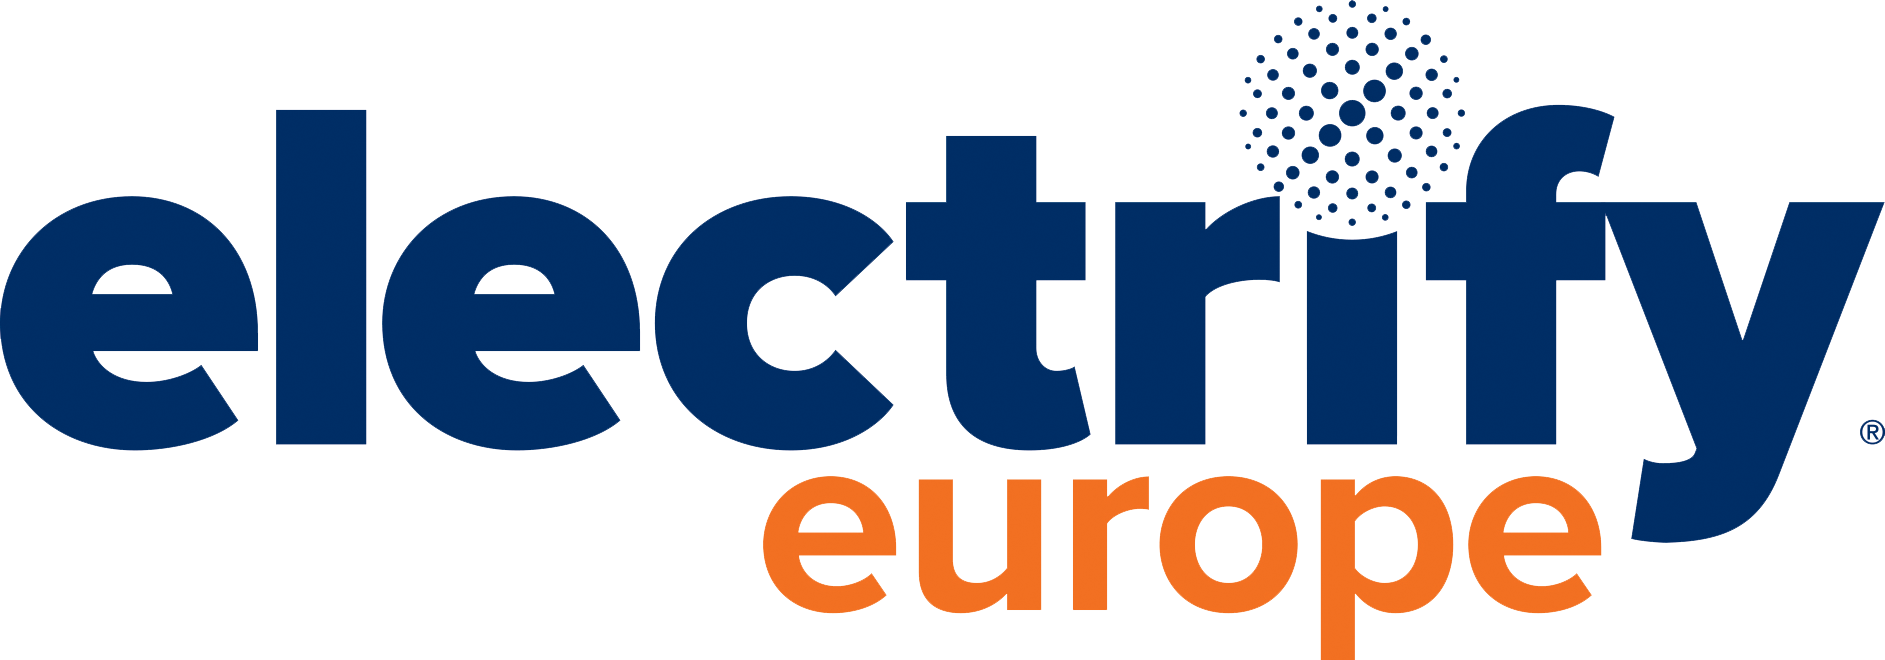 Electrify Europe Expo & Conference, 19-21/06/18, Vienna, Austria